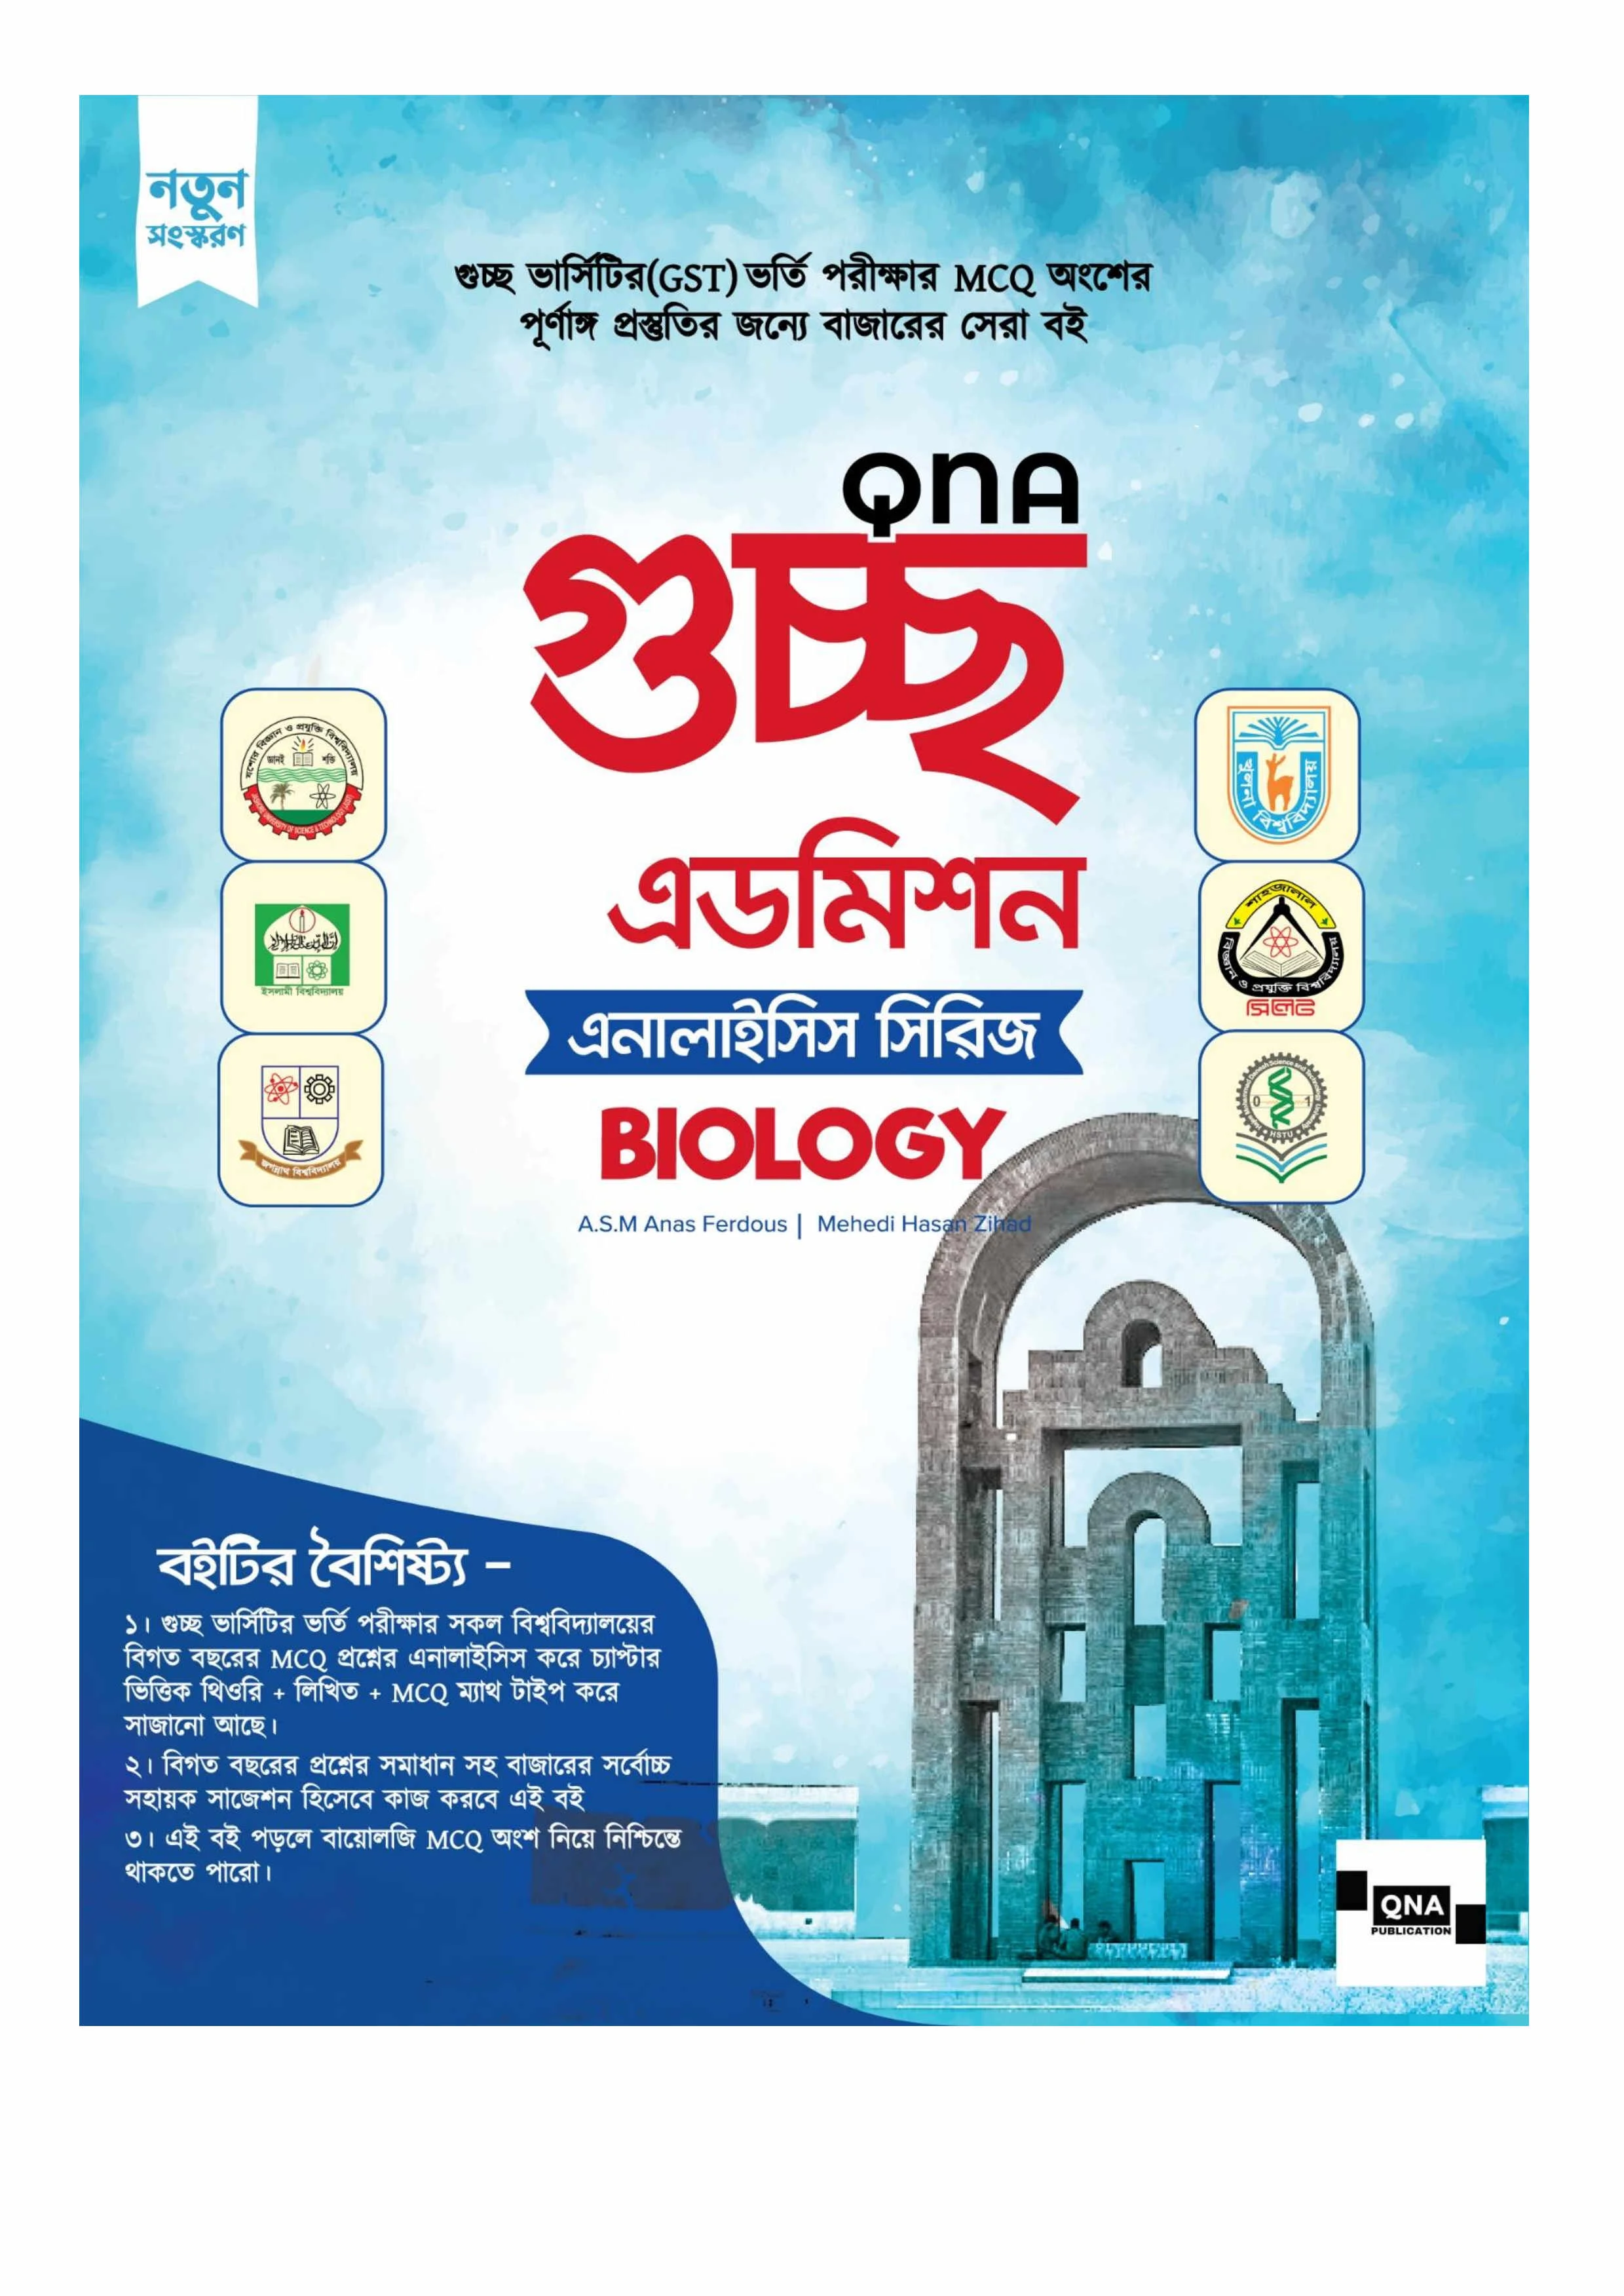 Qna gst admission analysis series biology pdf download | QNA গুচ্ছ এডমিশন অ্যানালাইসিস সিরিজ Biology PDF